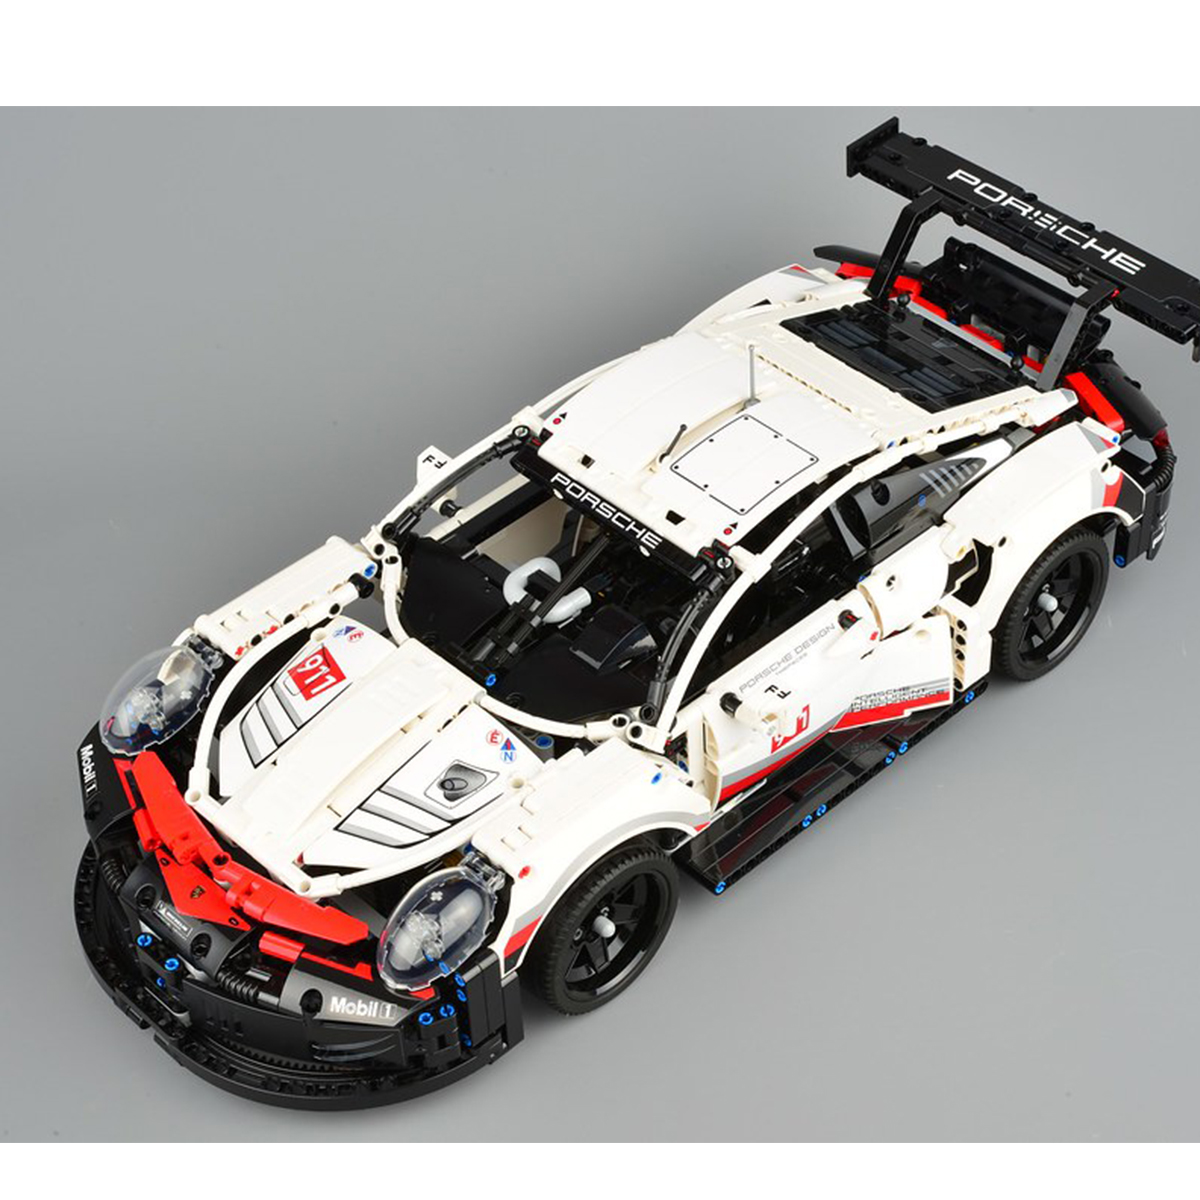 لگو مدل Porsche 911 RSR کد 42096 مجموعه 2 عددی